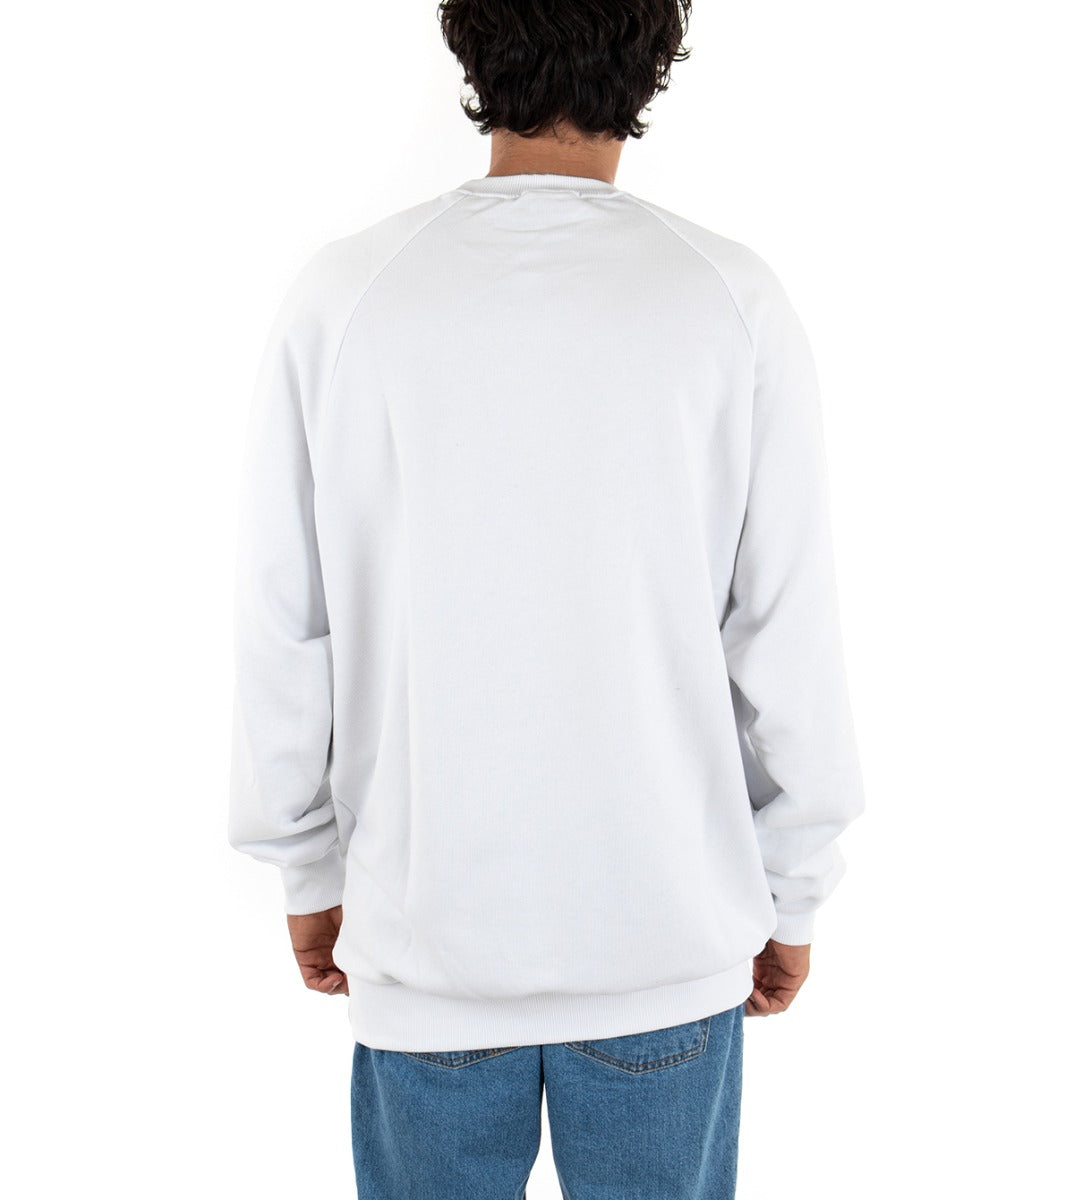 Men's White Crewneck Sweatshirt Solid Color Oversized White Shirt GIOSAL-F2732A